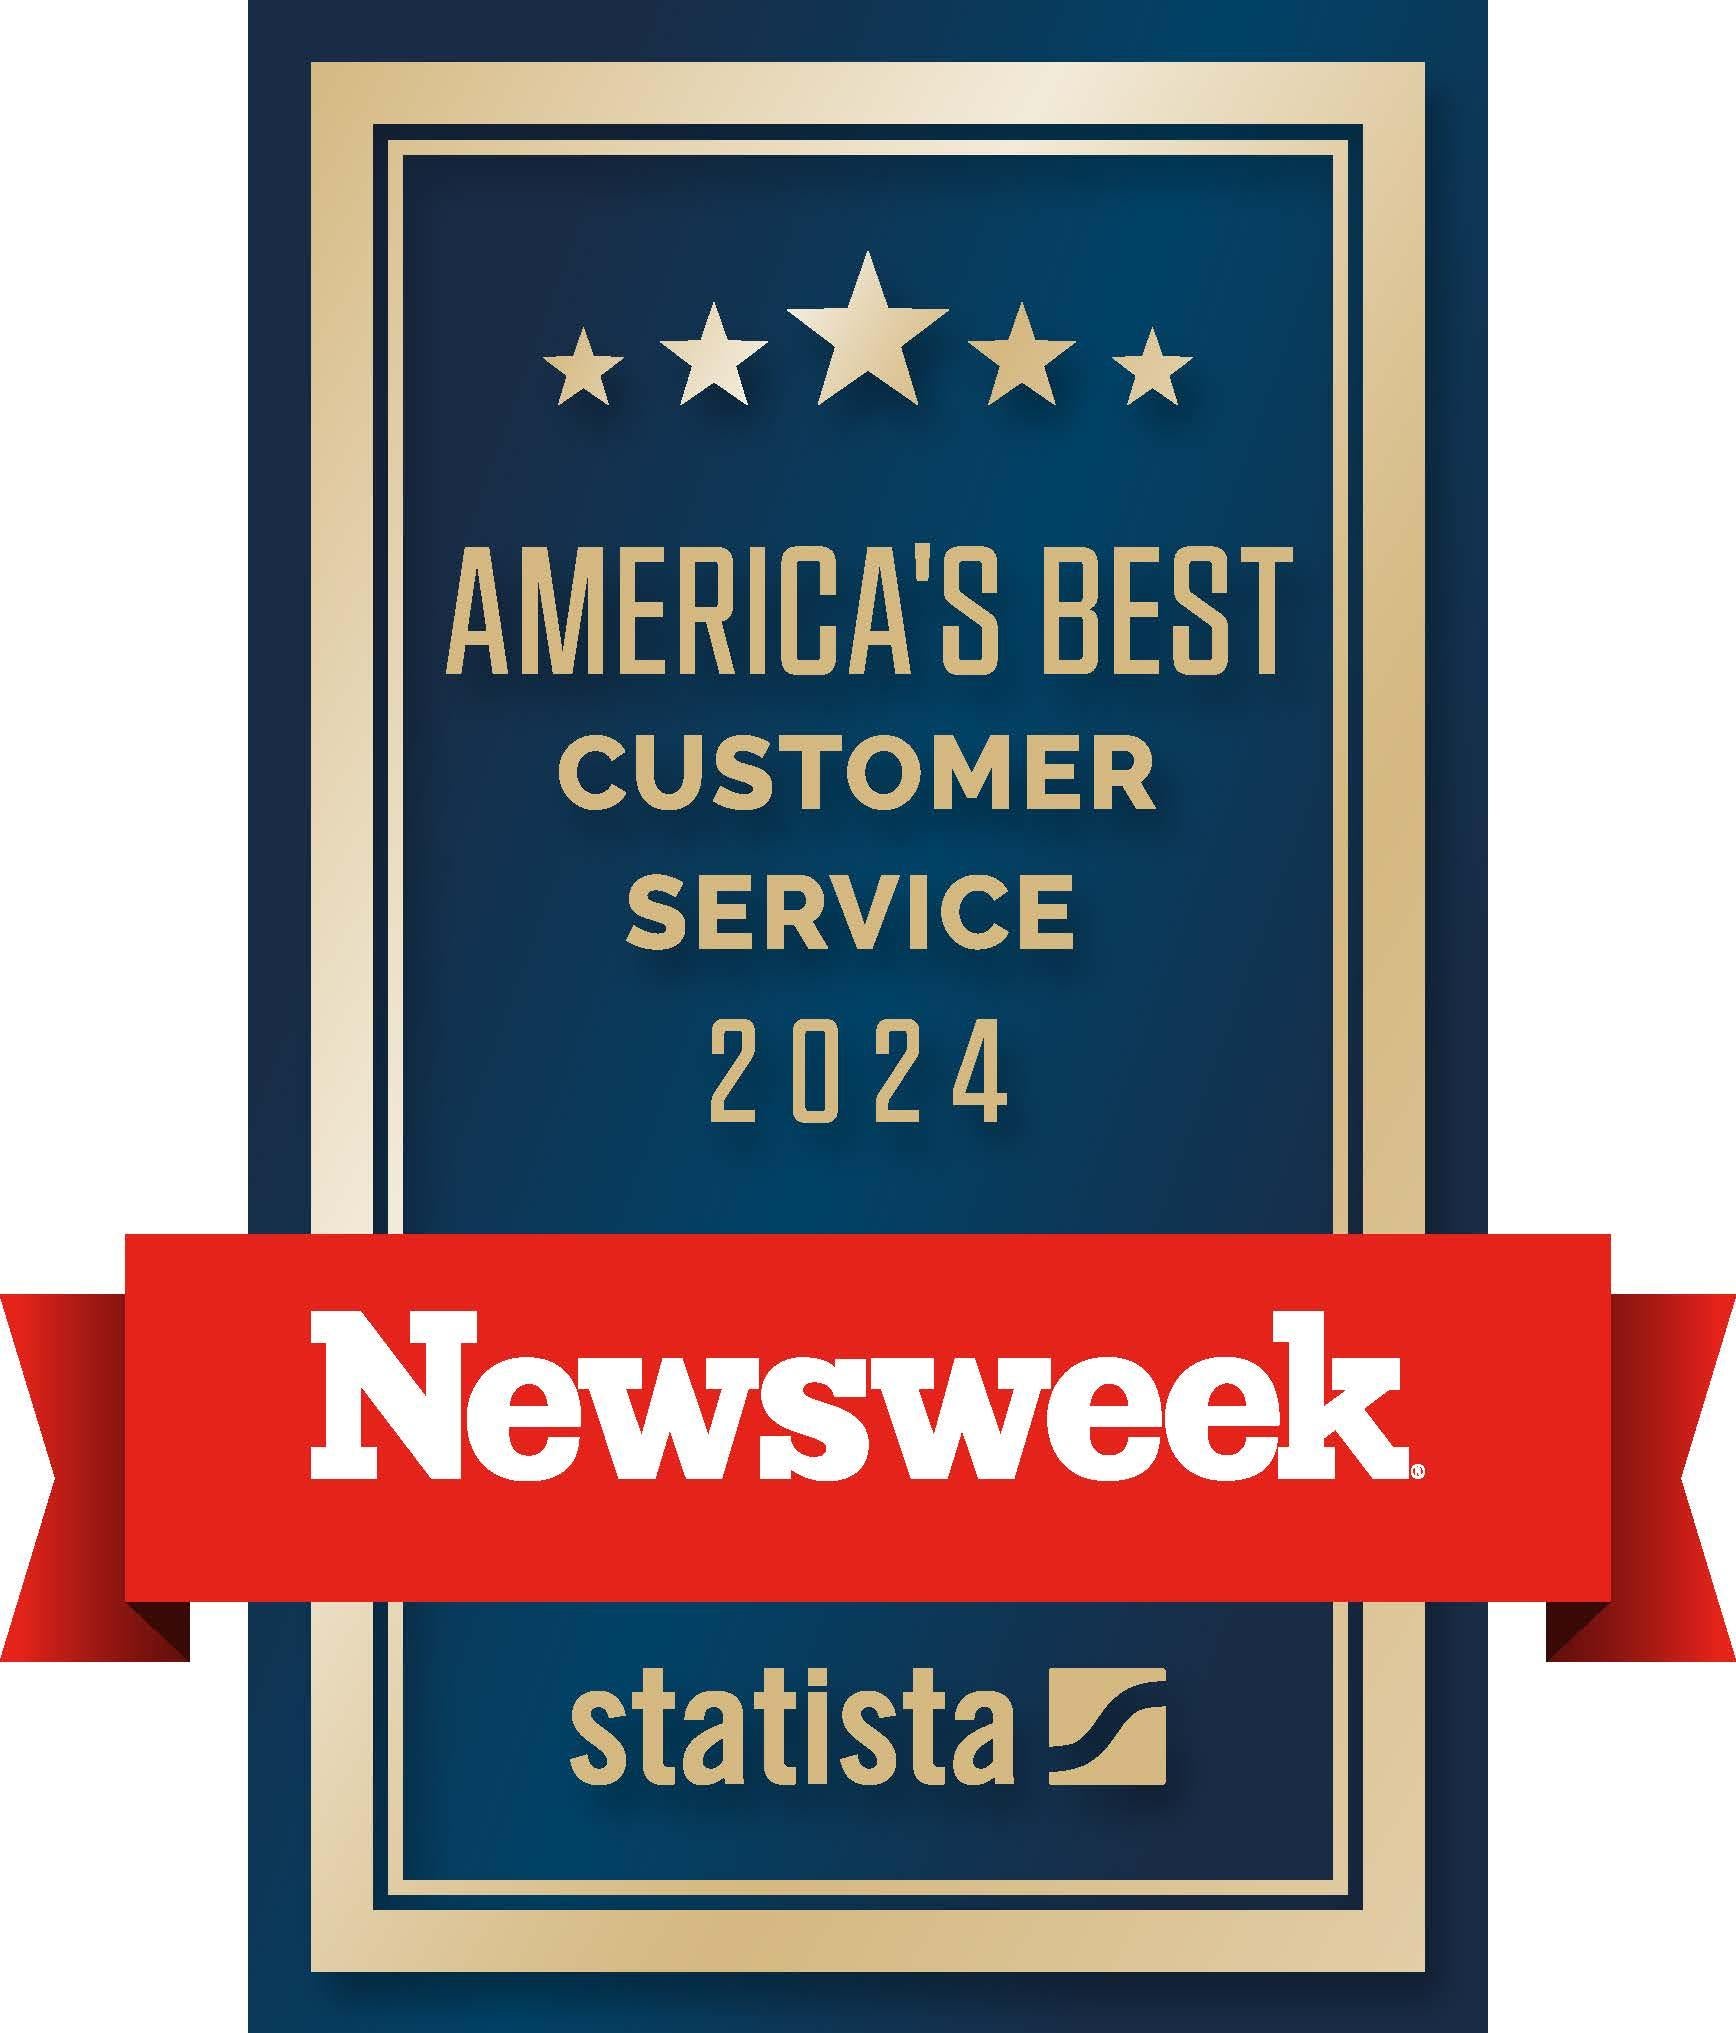 America's Best Customer Service 2024 - Newsweek